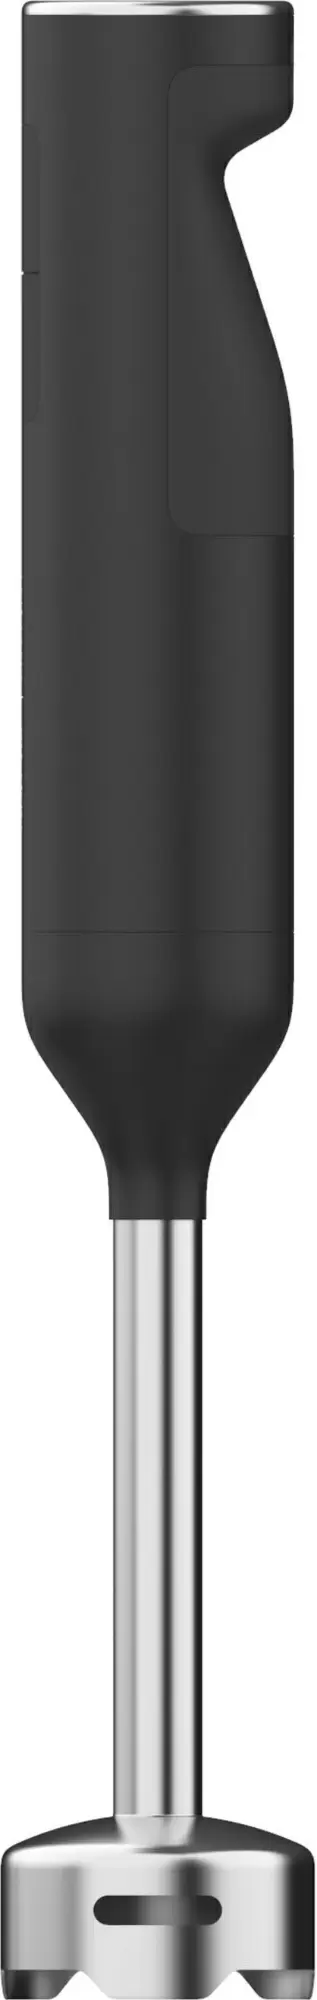 Blender Gorenje HB600ORAB, negru